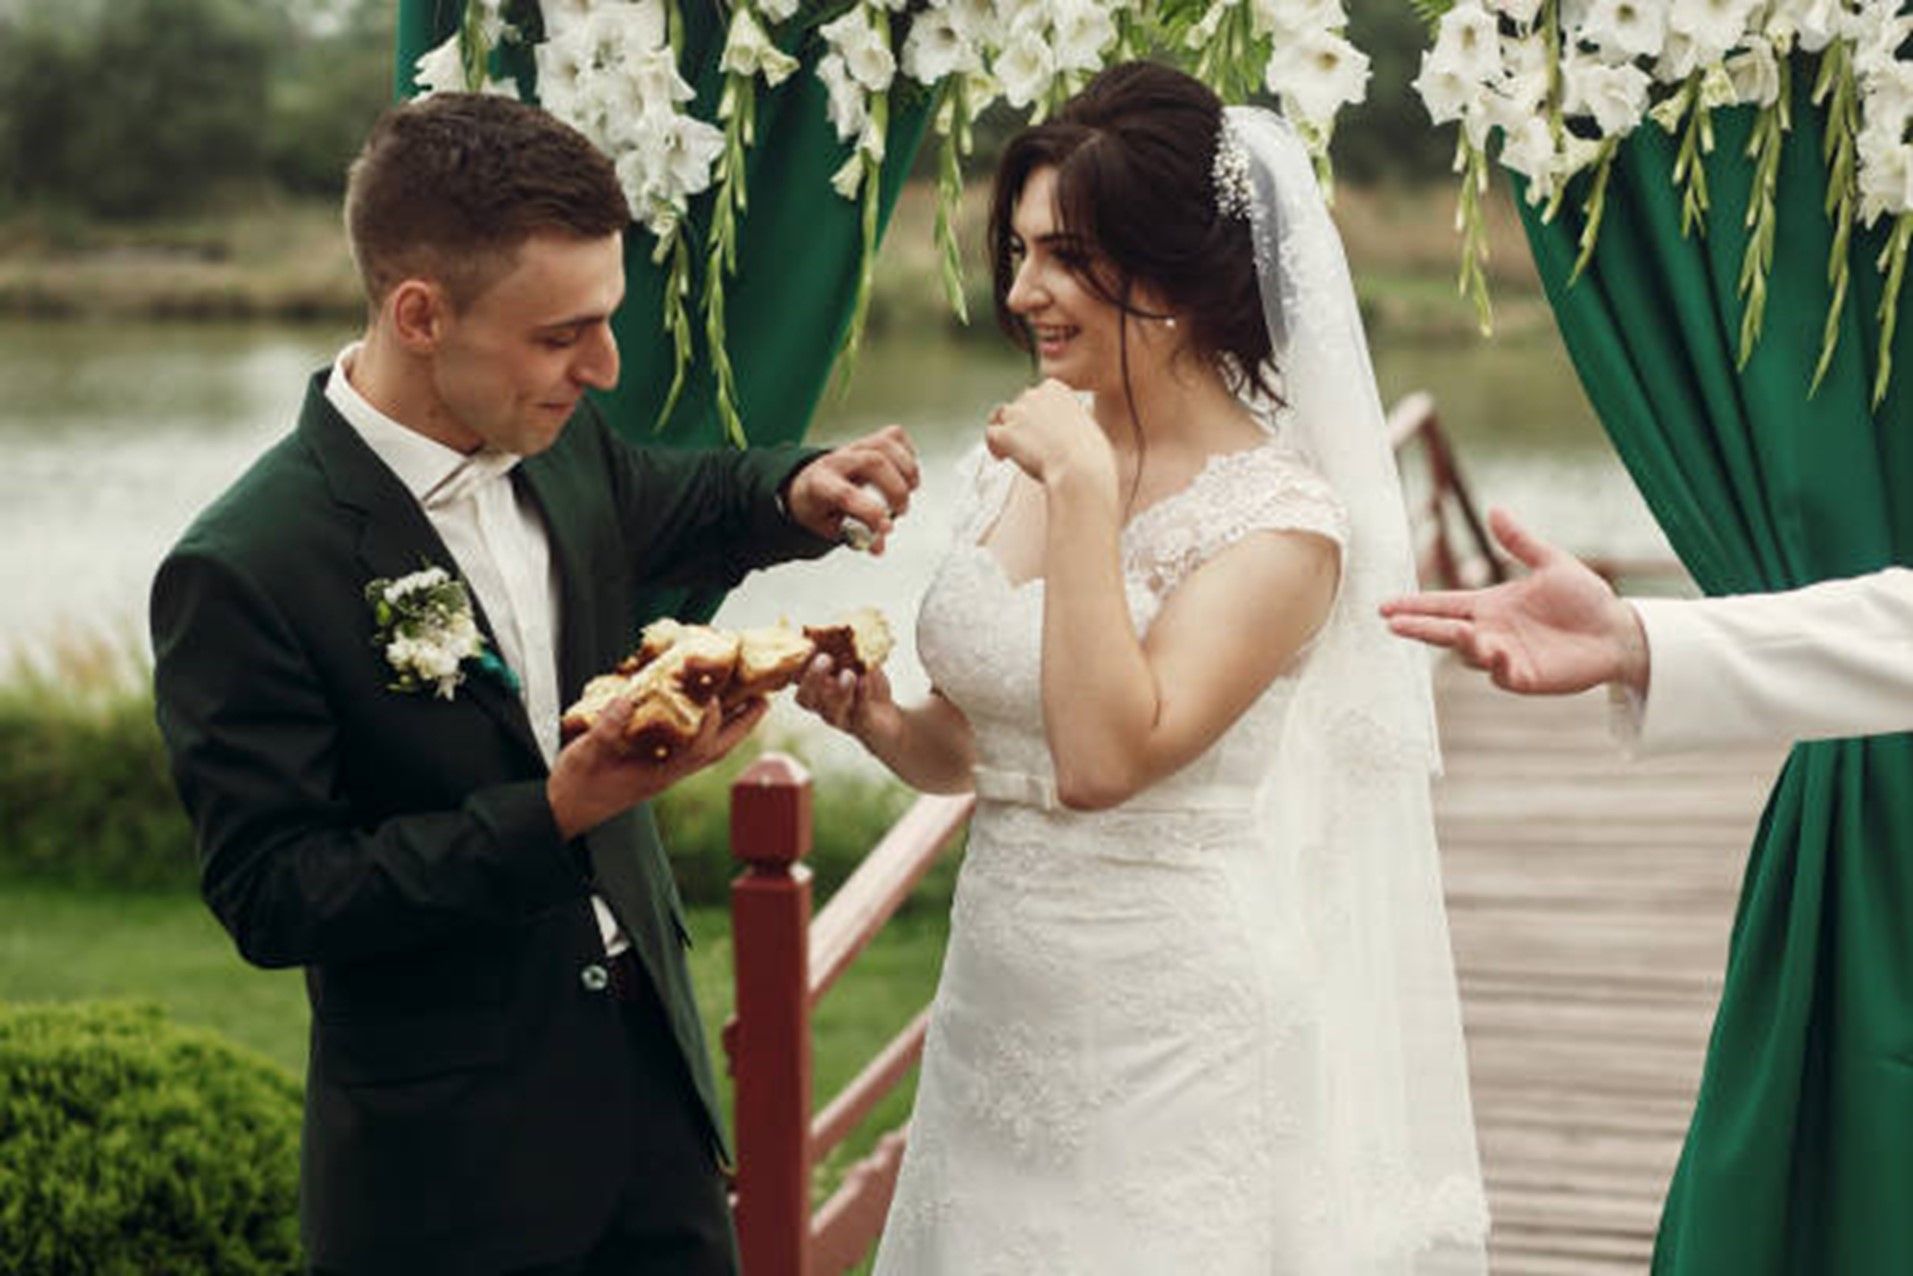 Hot Dog Guy's Wedding Delights: An NYC Bride's Culinary Romance in Orlando, FL